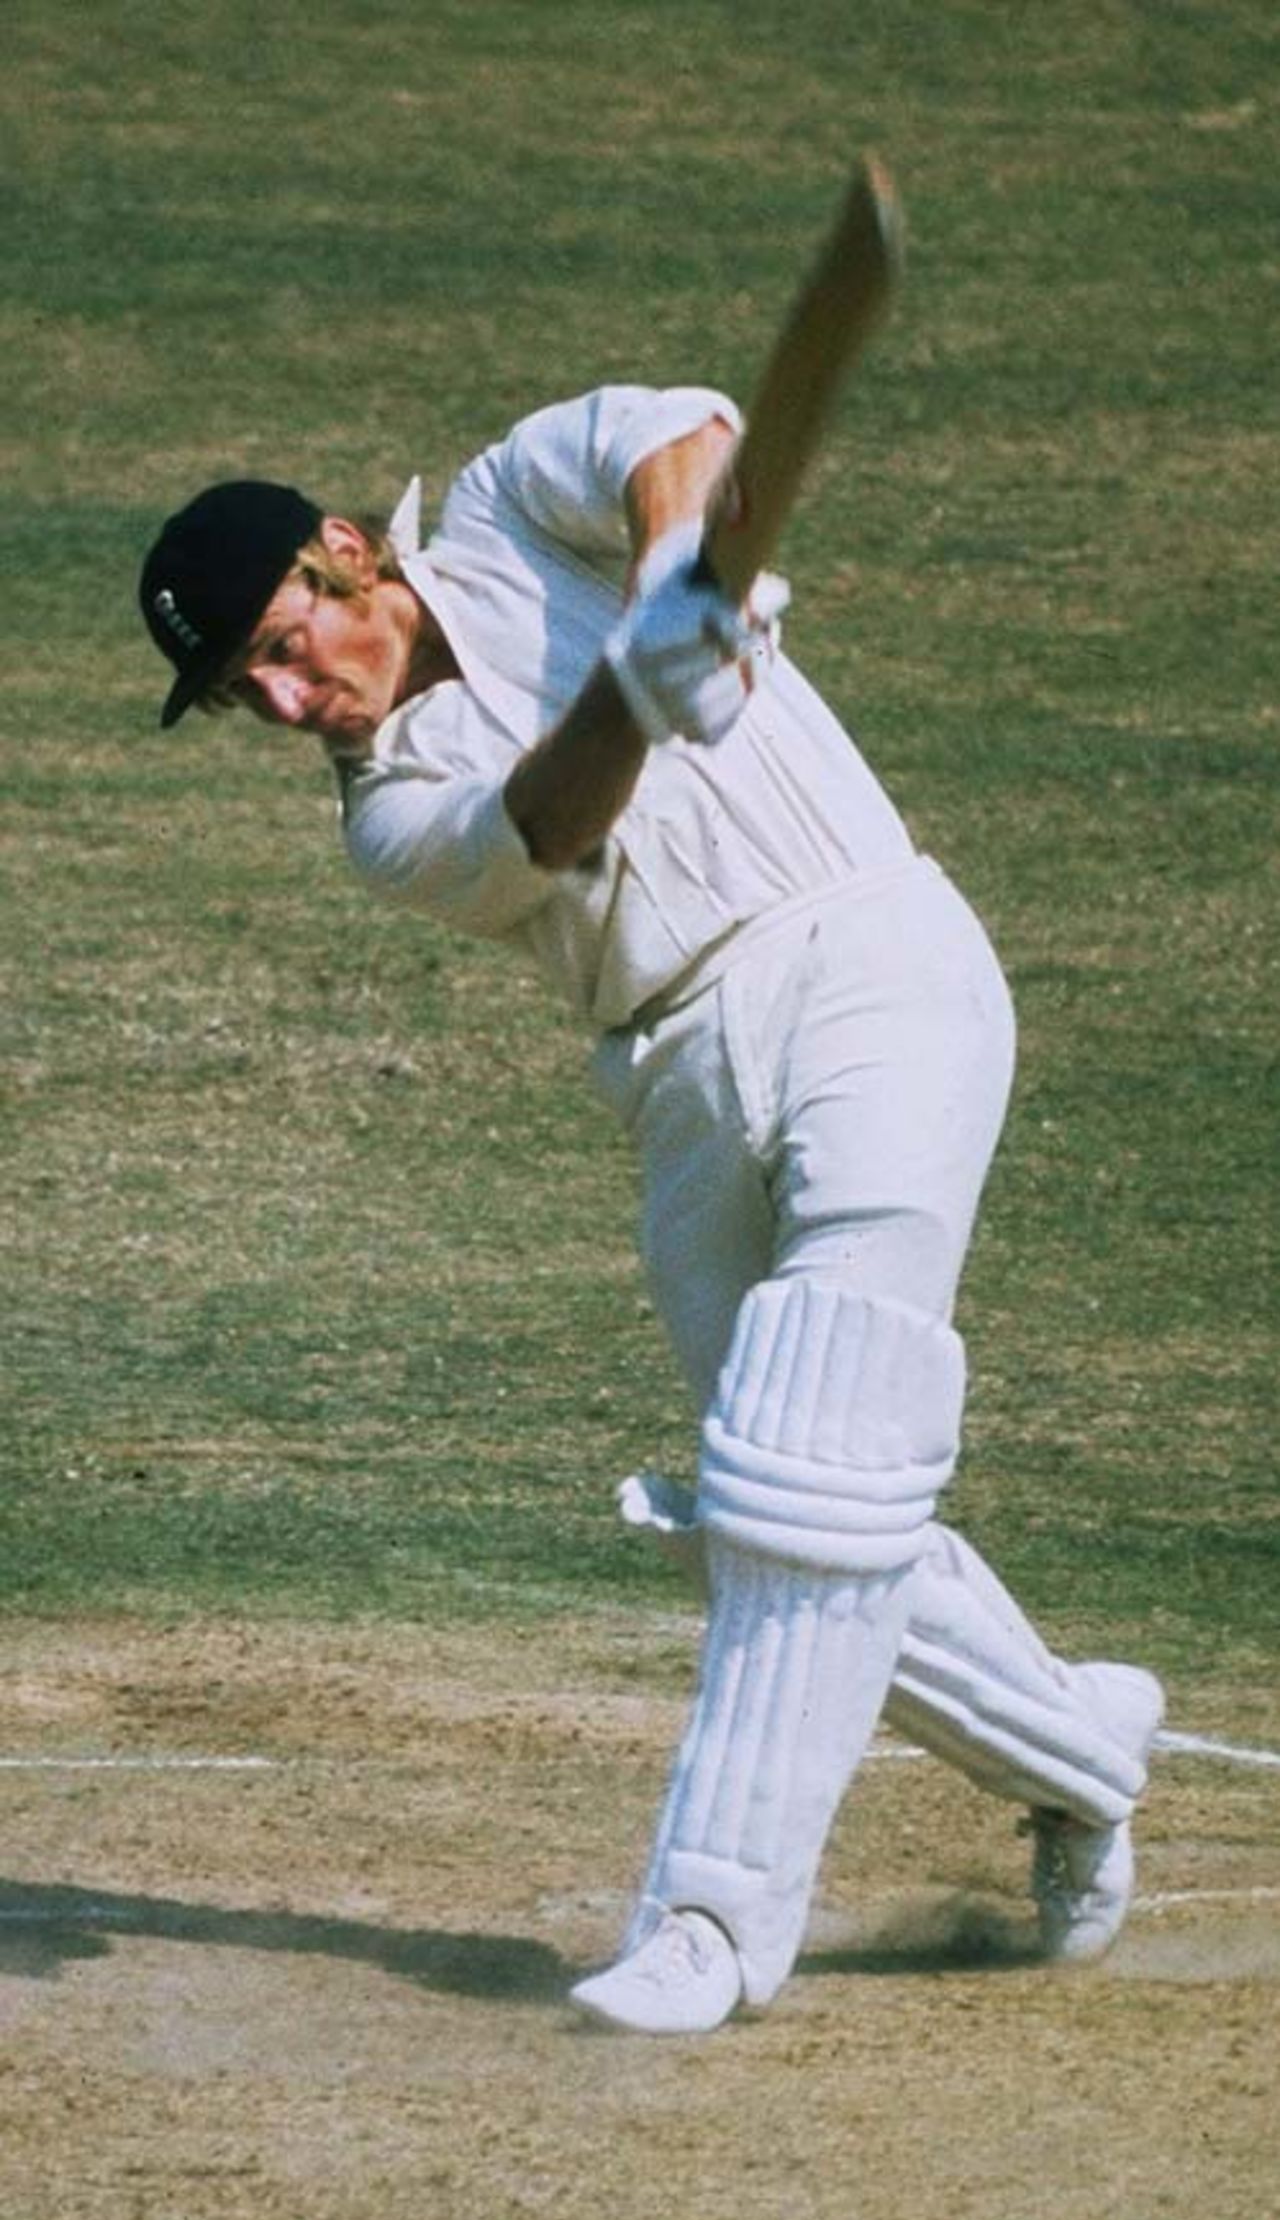 Barry Wood drives, England v Australia, Lord's, 2nd Test, July 1975